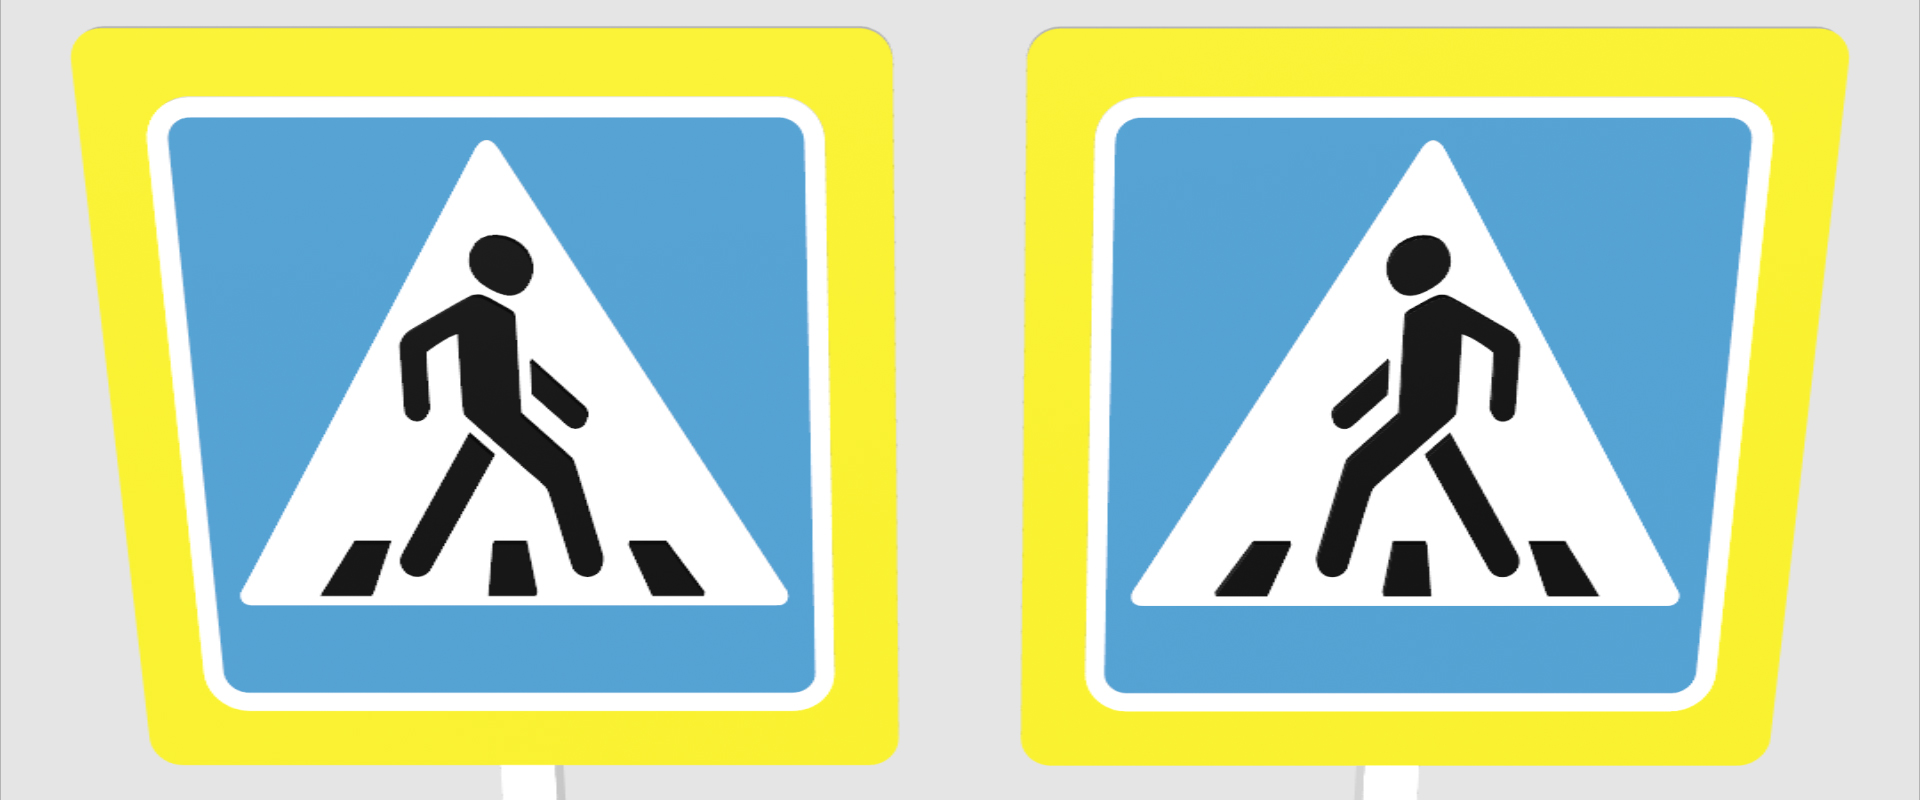 Тип пешеходного перехода